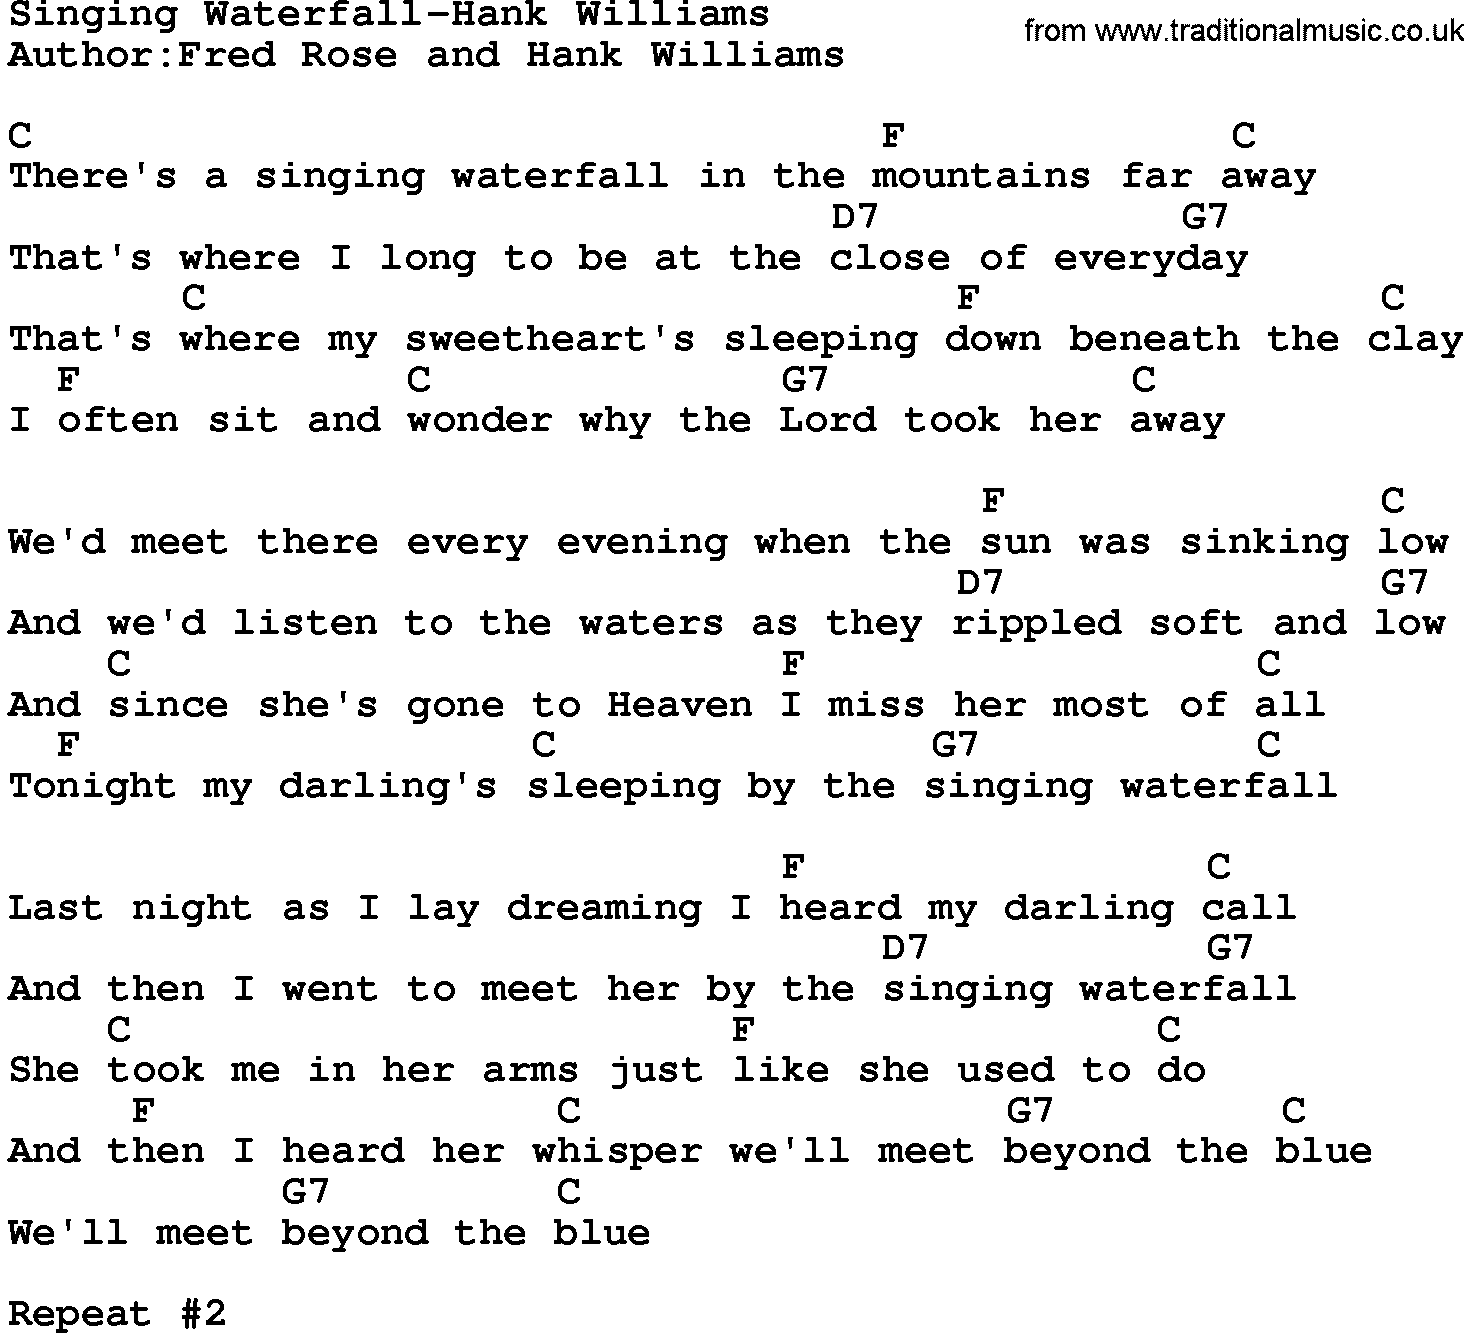 Country music song: Singing Waterfall-Hank Williams lyrics and chords